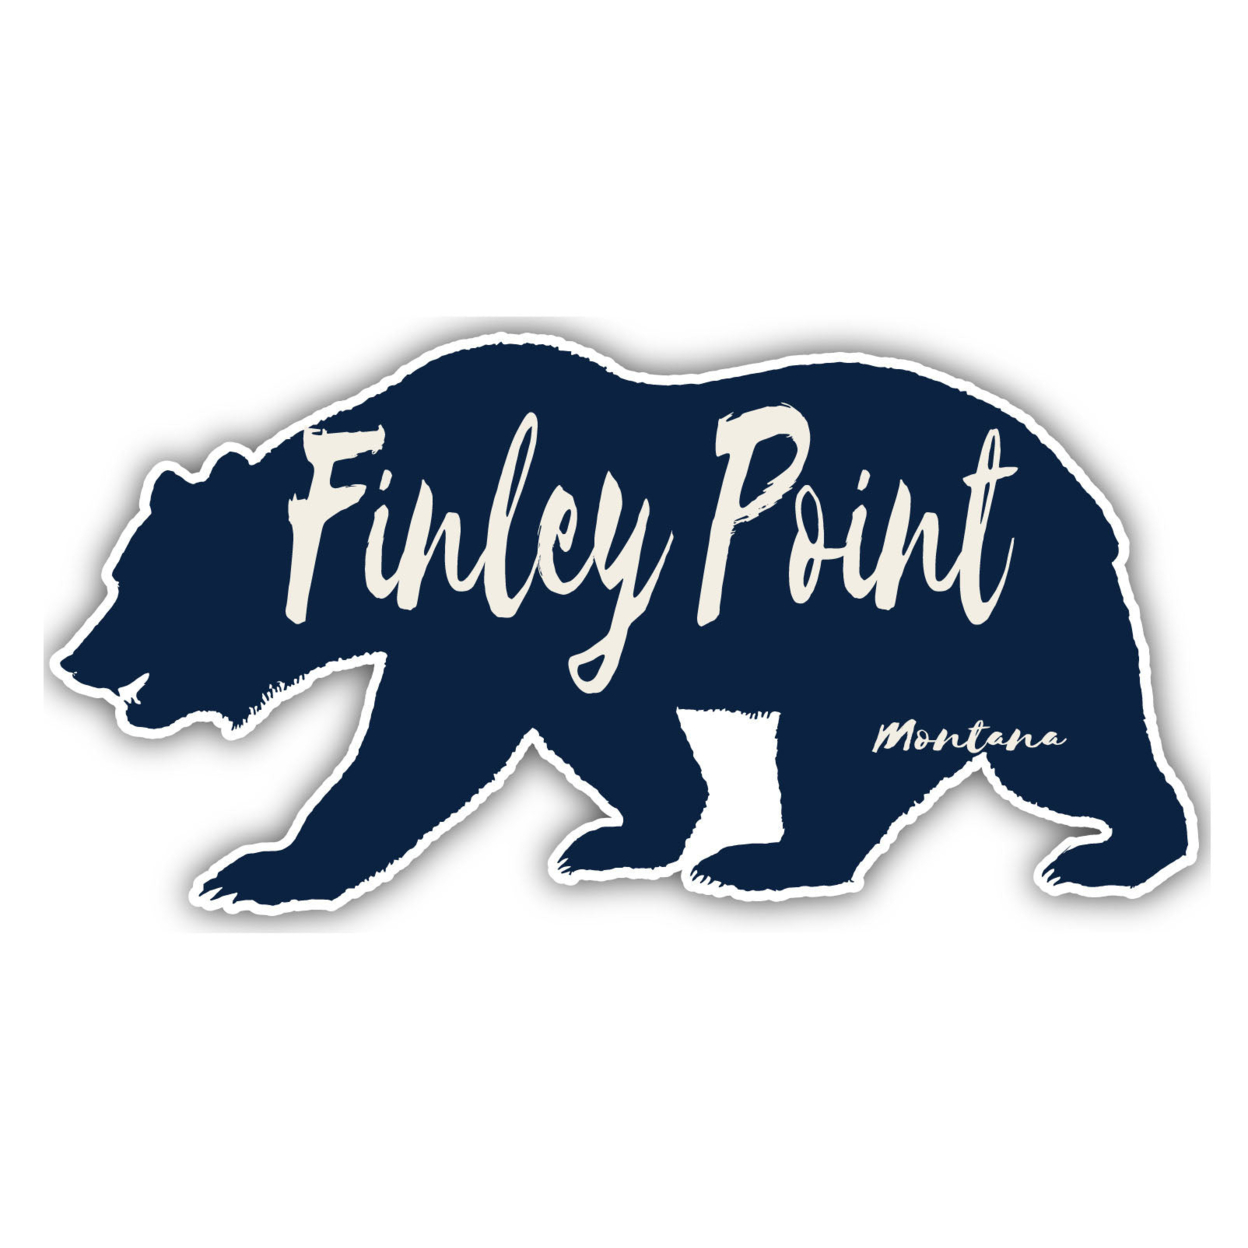 Finley Point Montana Souvenir Decorative Stickers (Choose Theme And Size) - Single Unit, 4-Inch, Bear